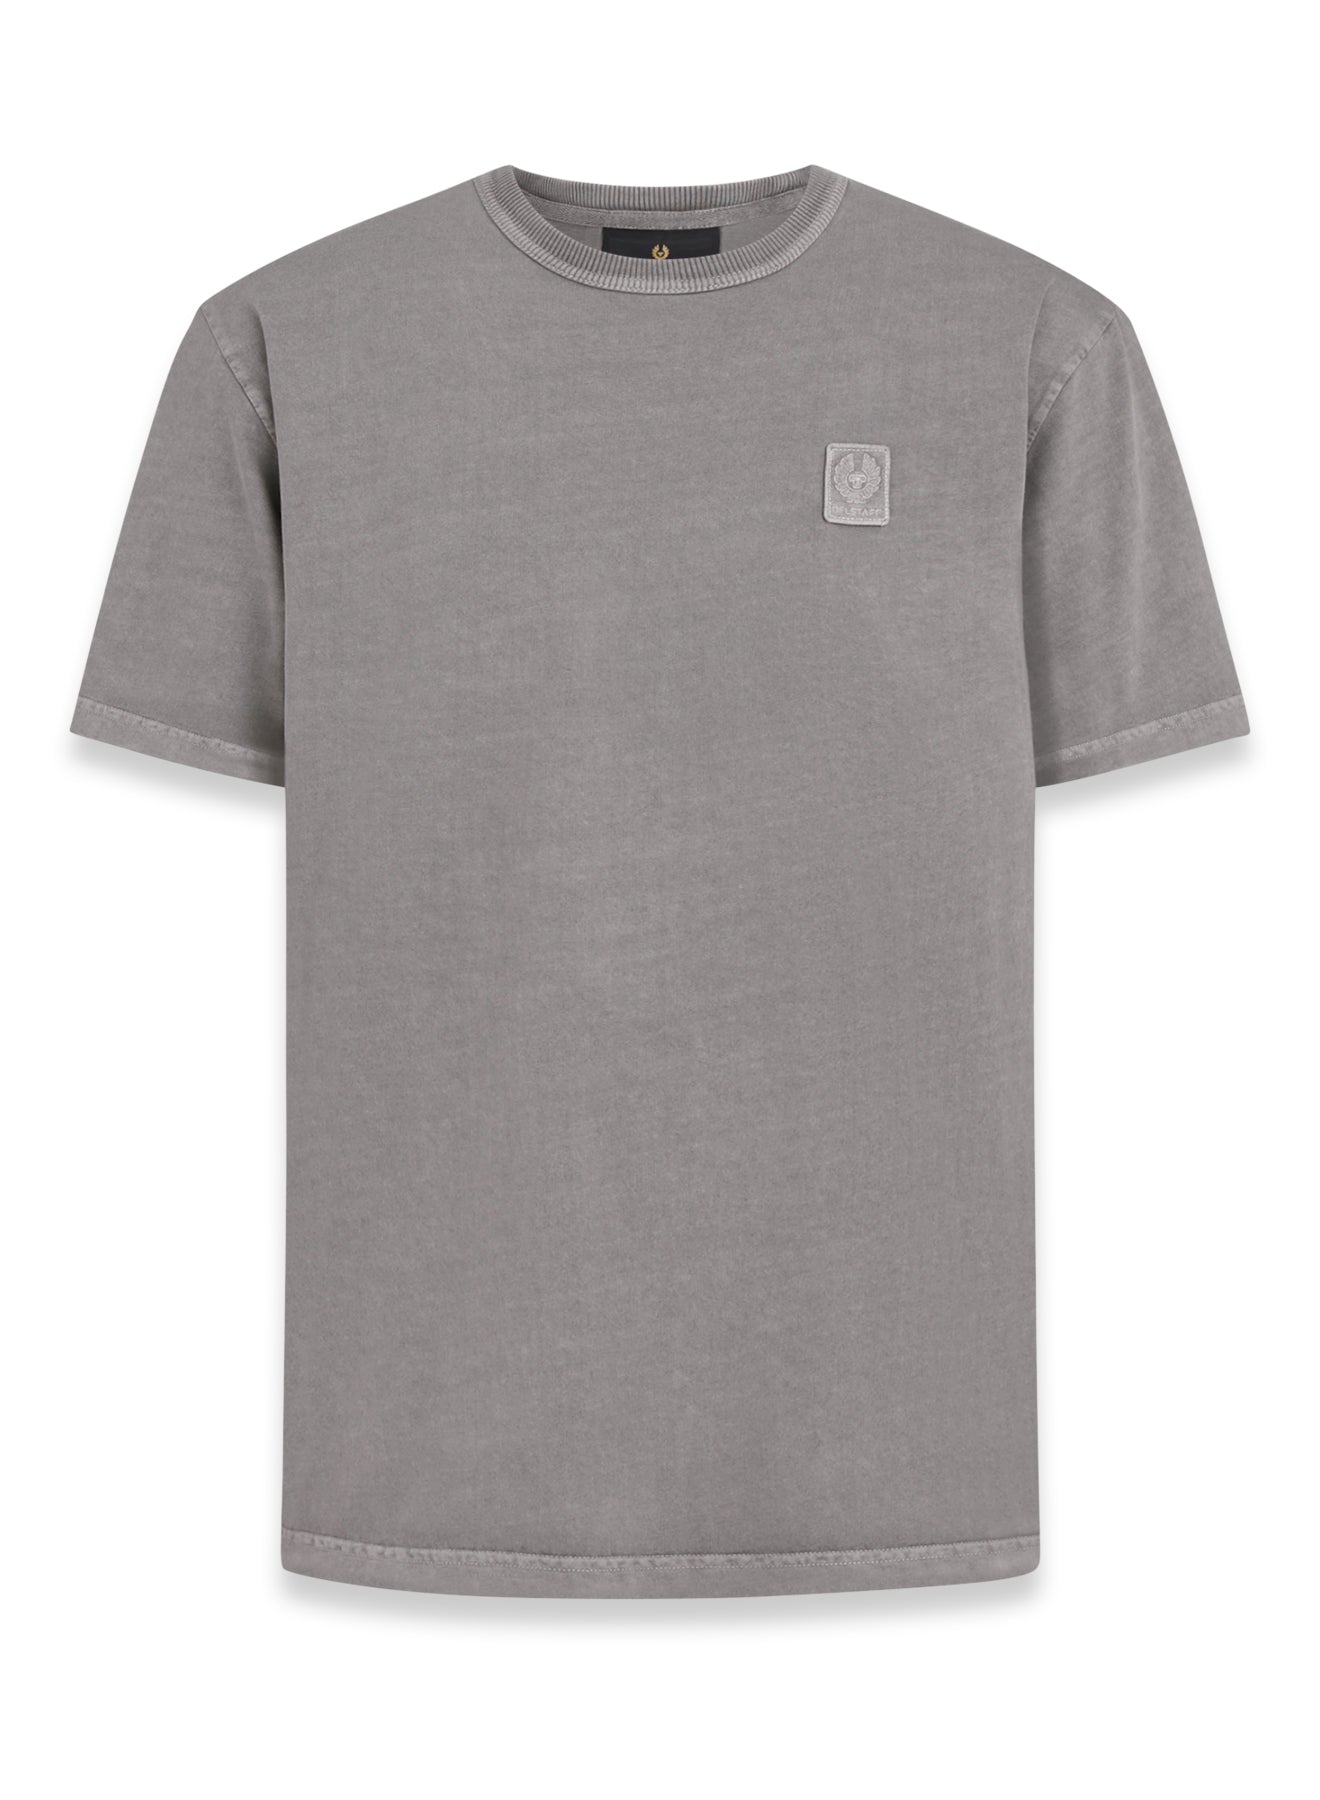 Belstaff Mineral Outliner T-Shirt in Cloud Grey